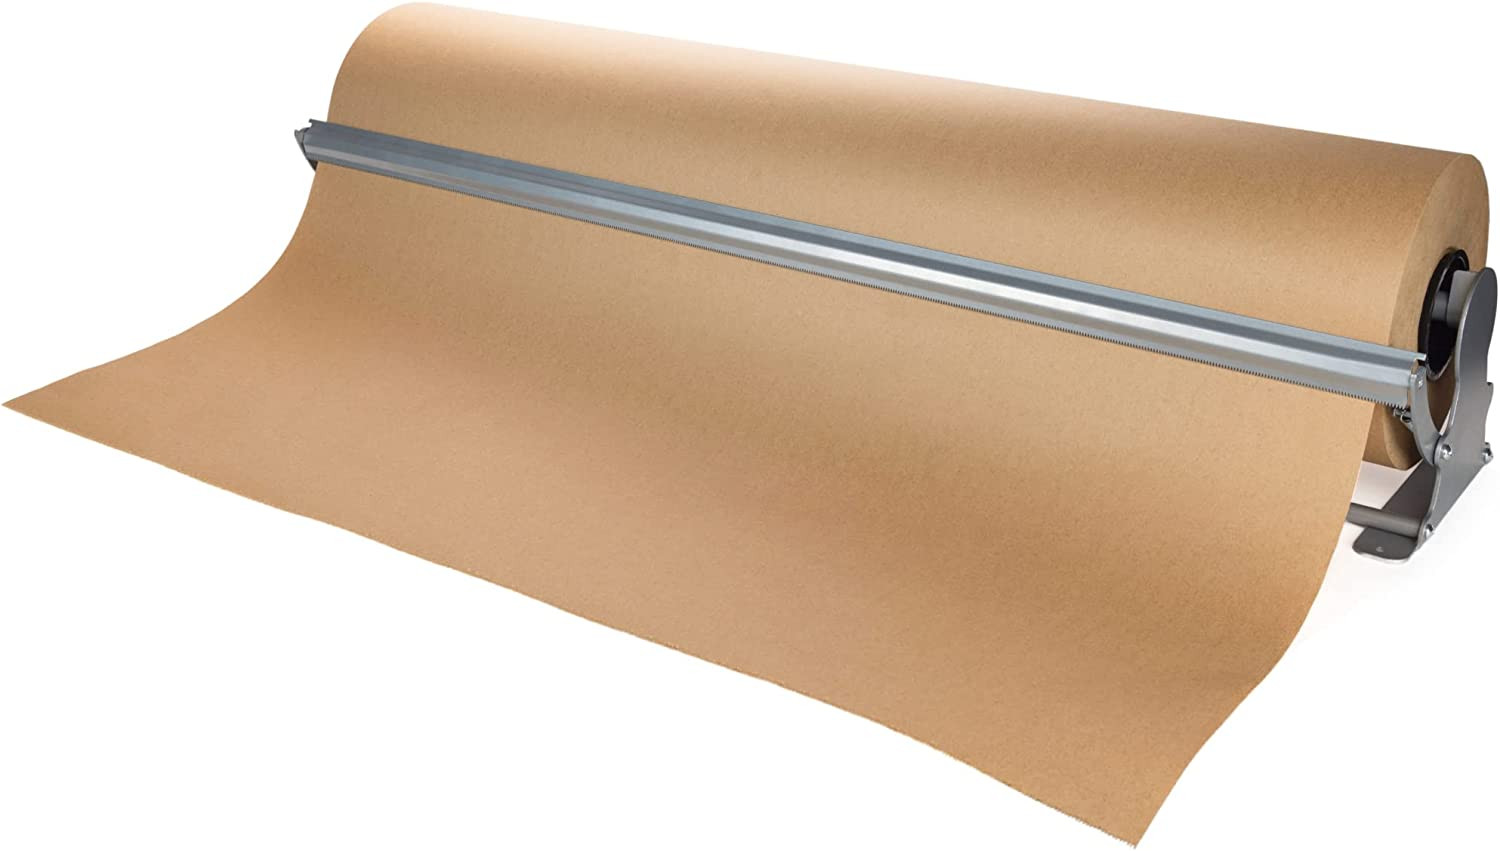 Bagcraft Papercon 18BP, 18x1000' Printed Butcher Paper Roll, 1 Roll